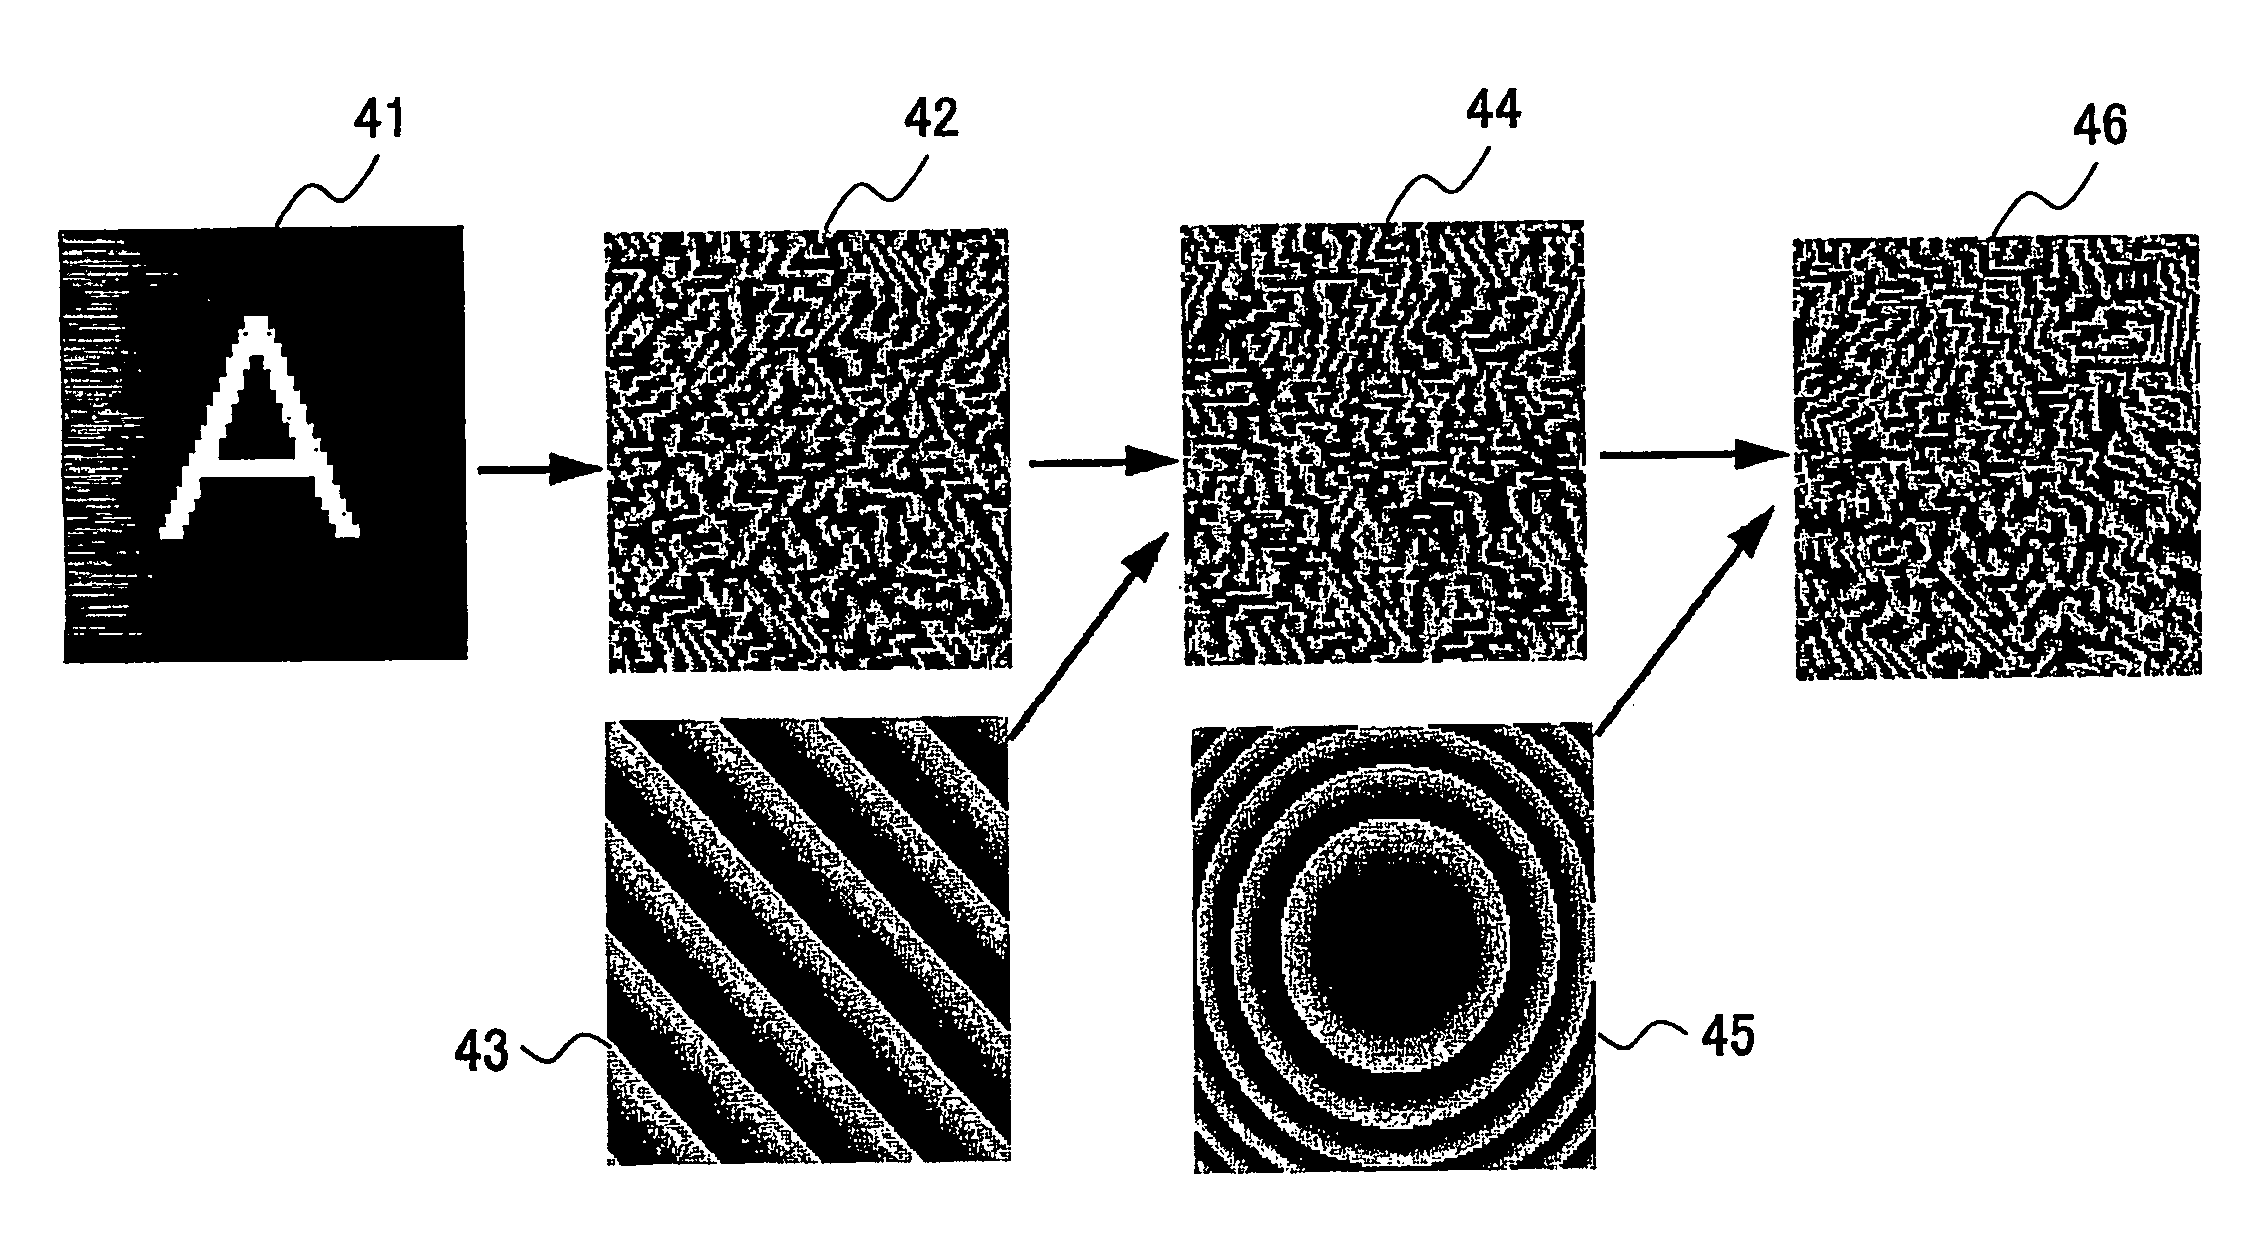 Laser processing apparatus using distinct horizontal and vertical data sets